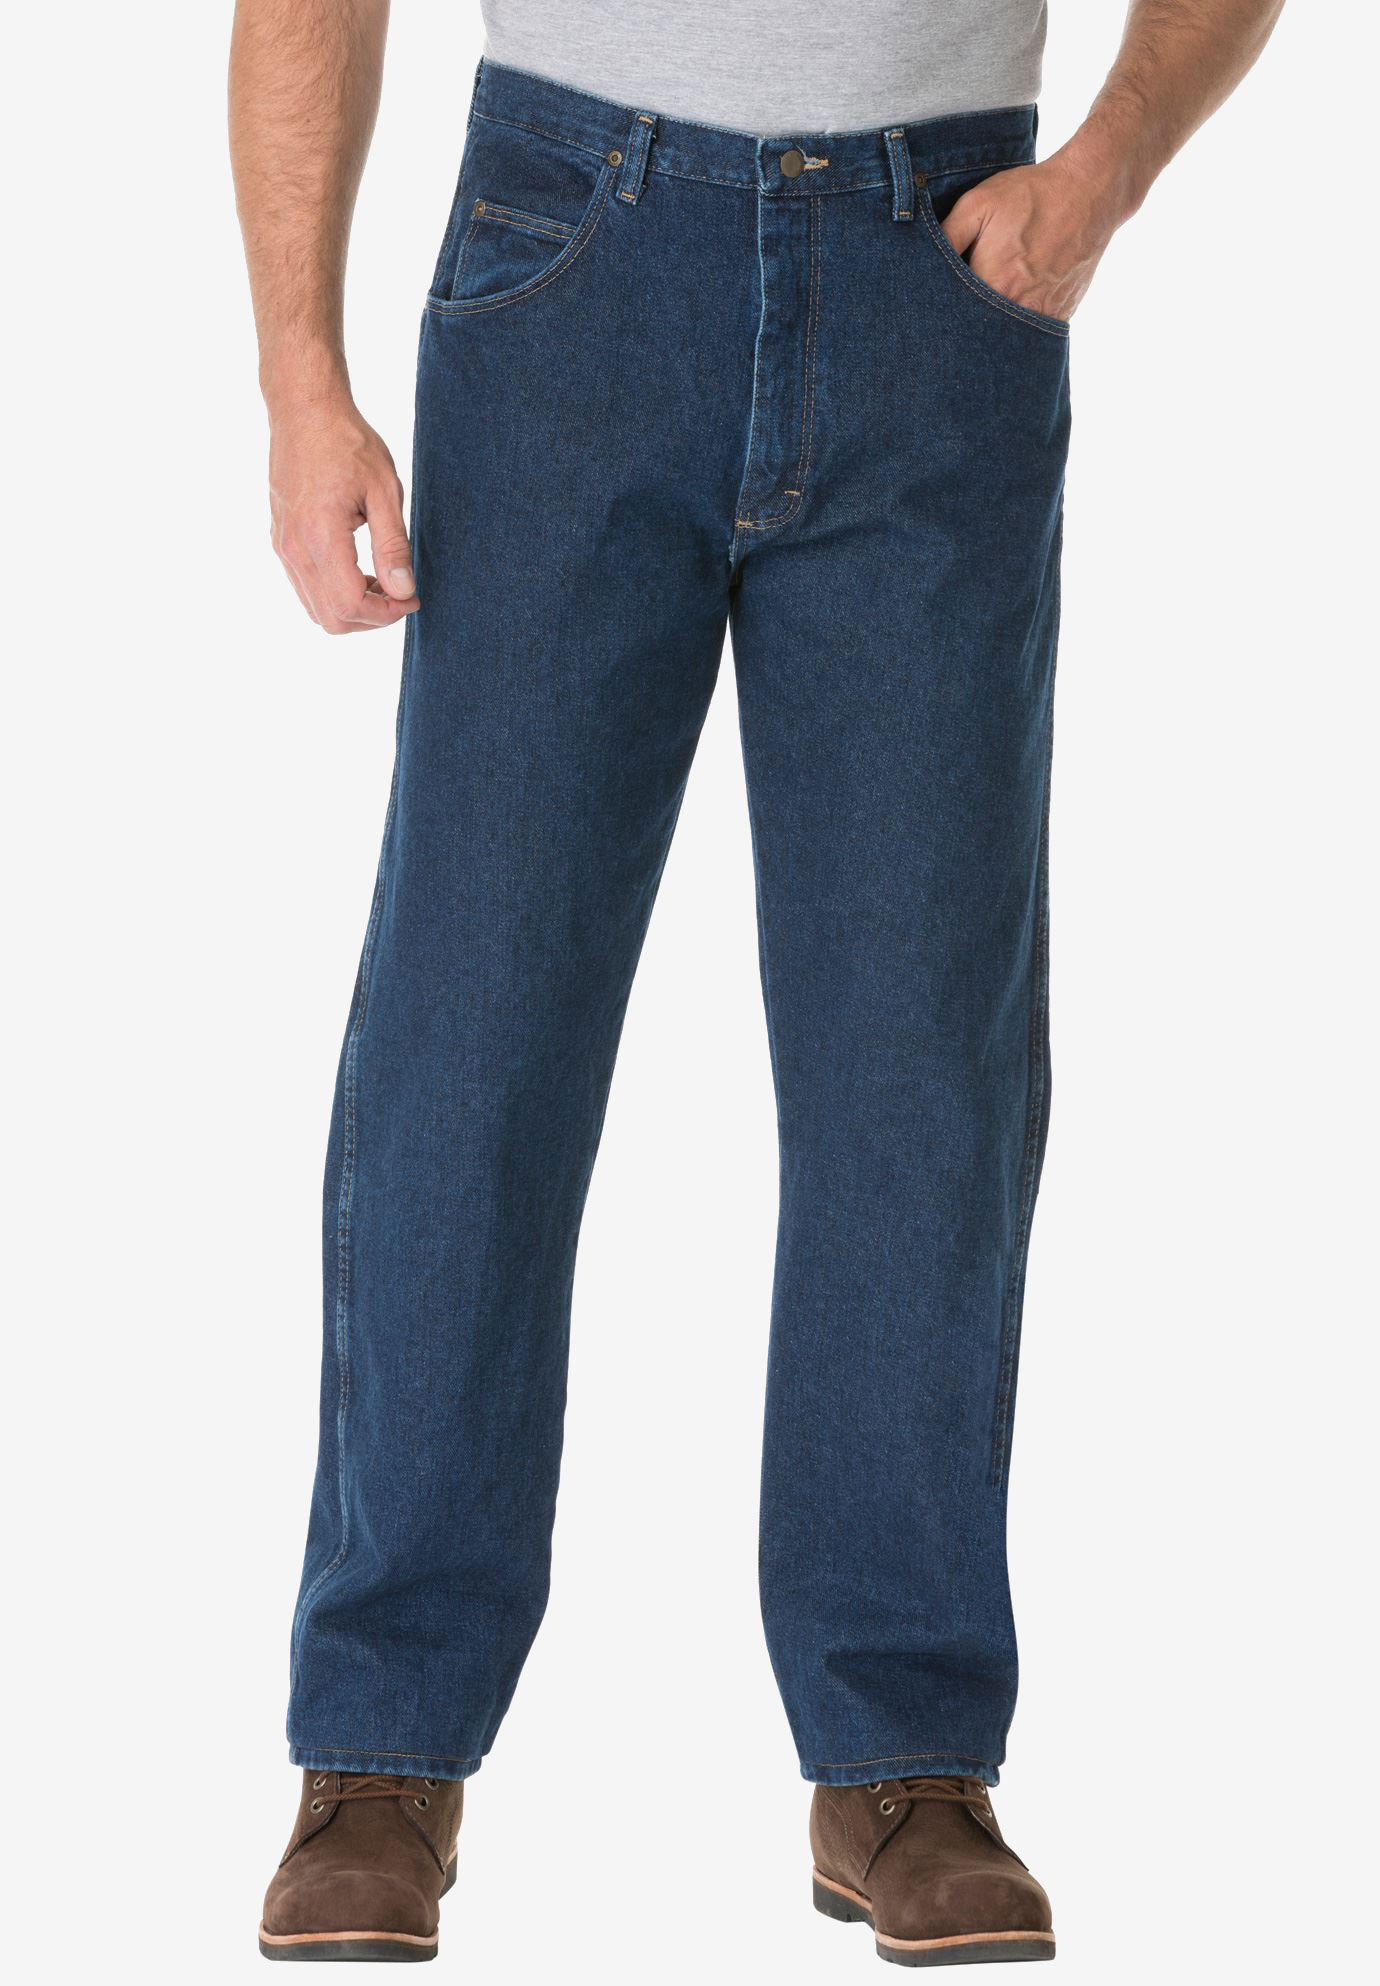 wrangler jeans lowest price